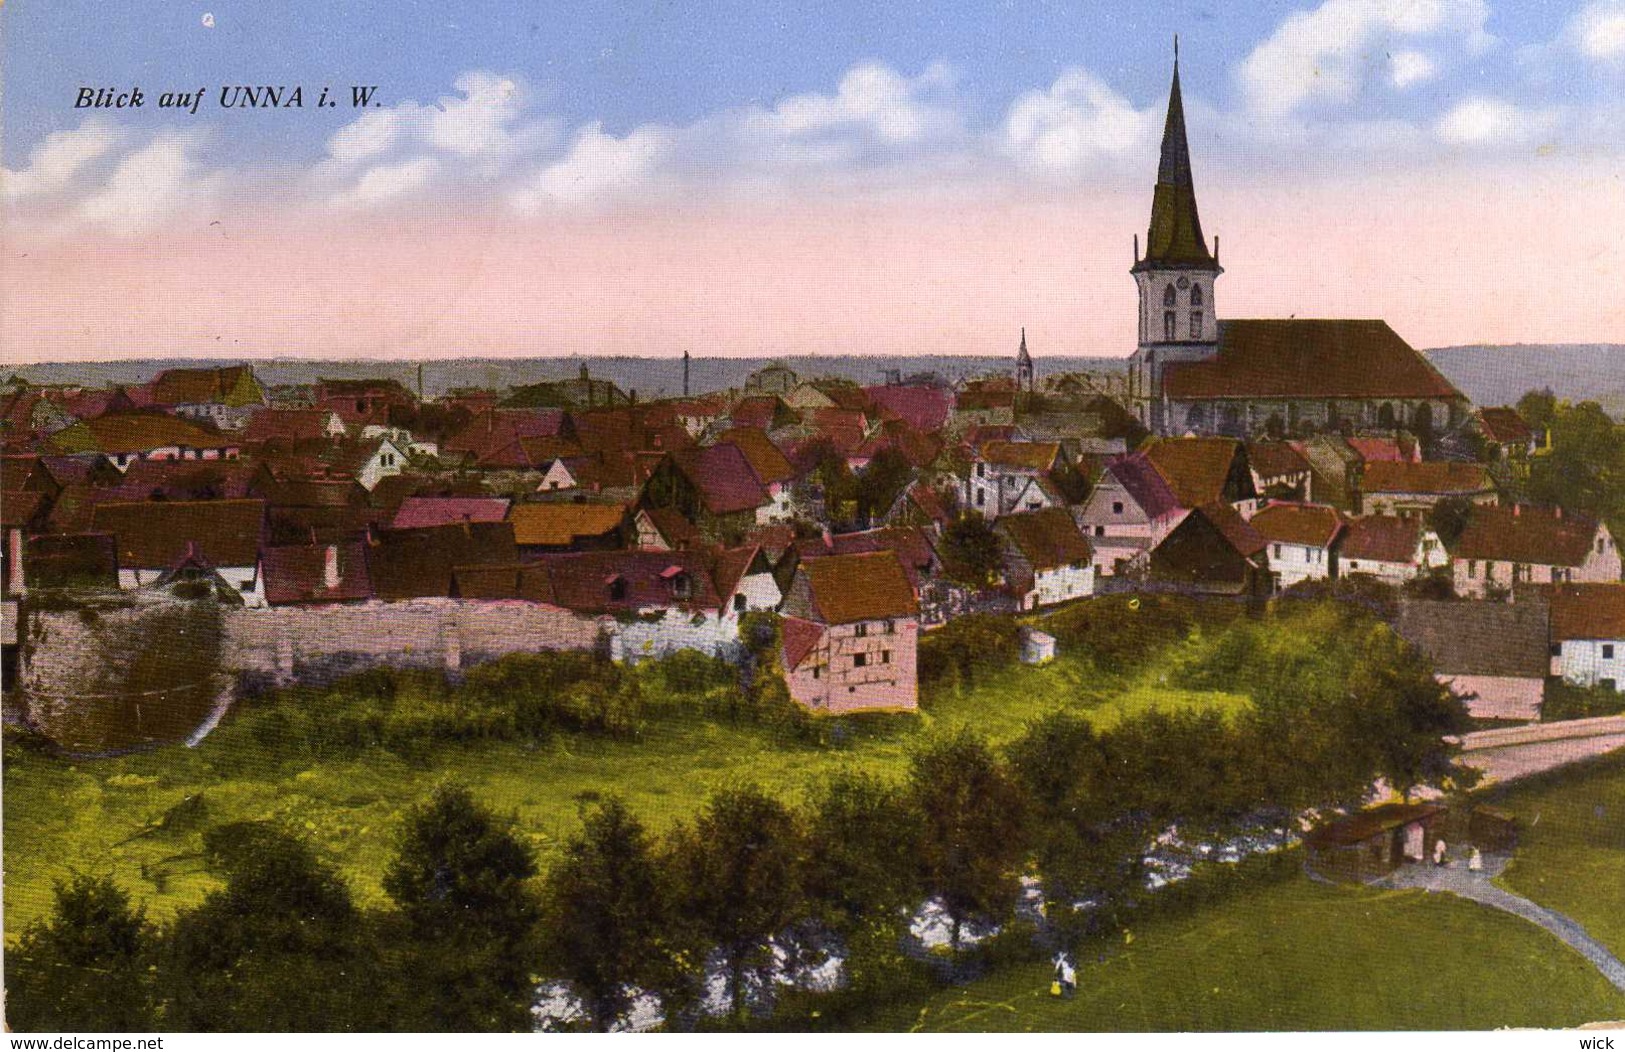 AK Unna  -Blick Auf Unna I. Westfalen  -seltene Feldpostkarte 1942      - Rar !!! - Unna